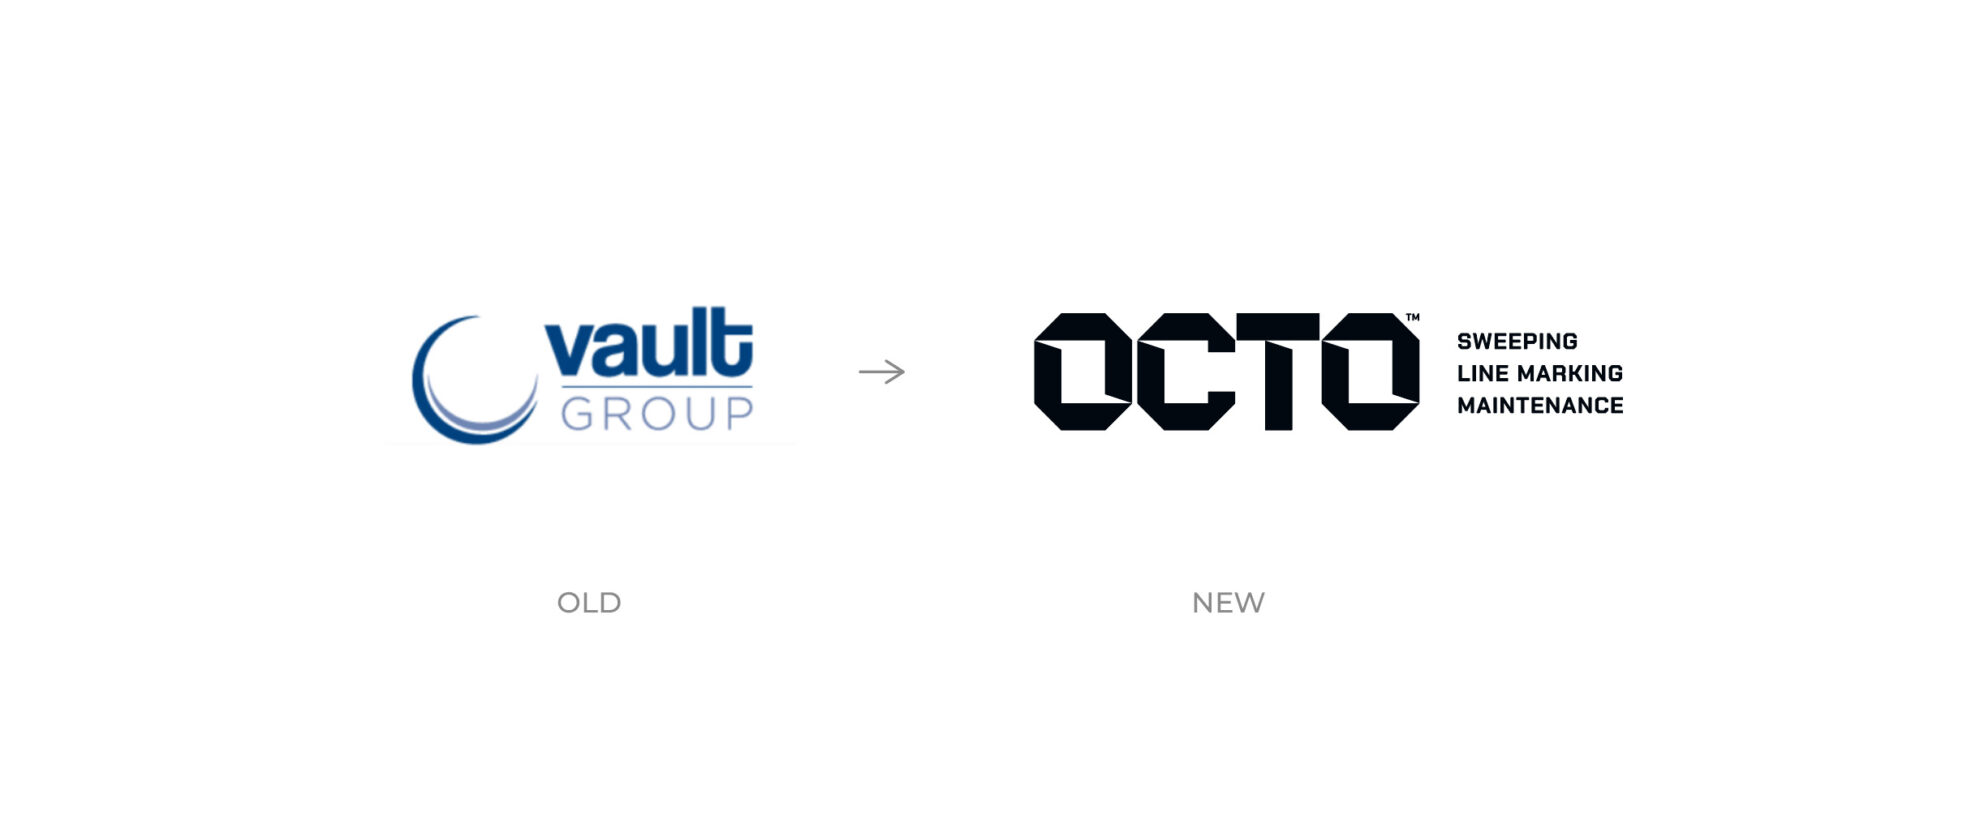 Vault Group to Octo Branding